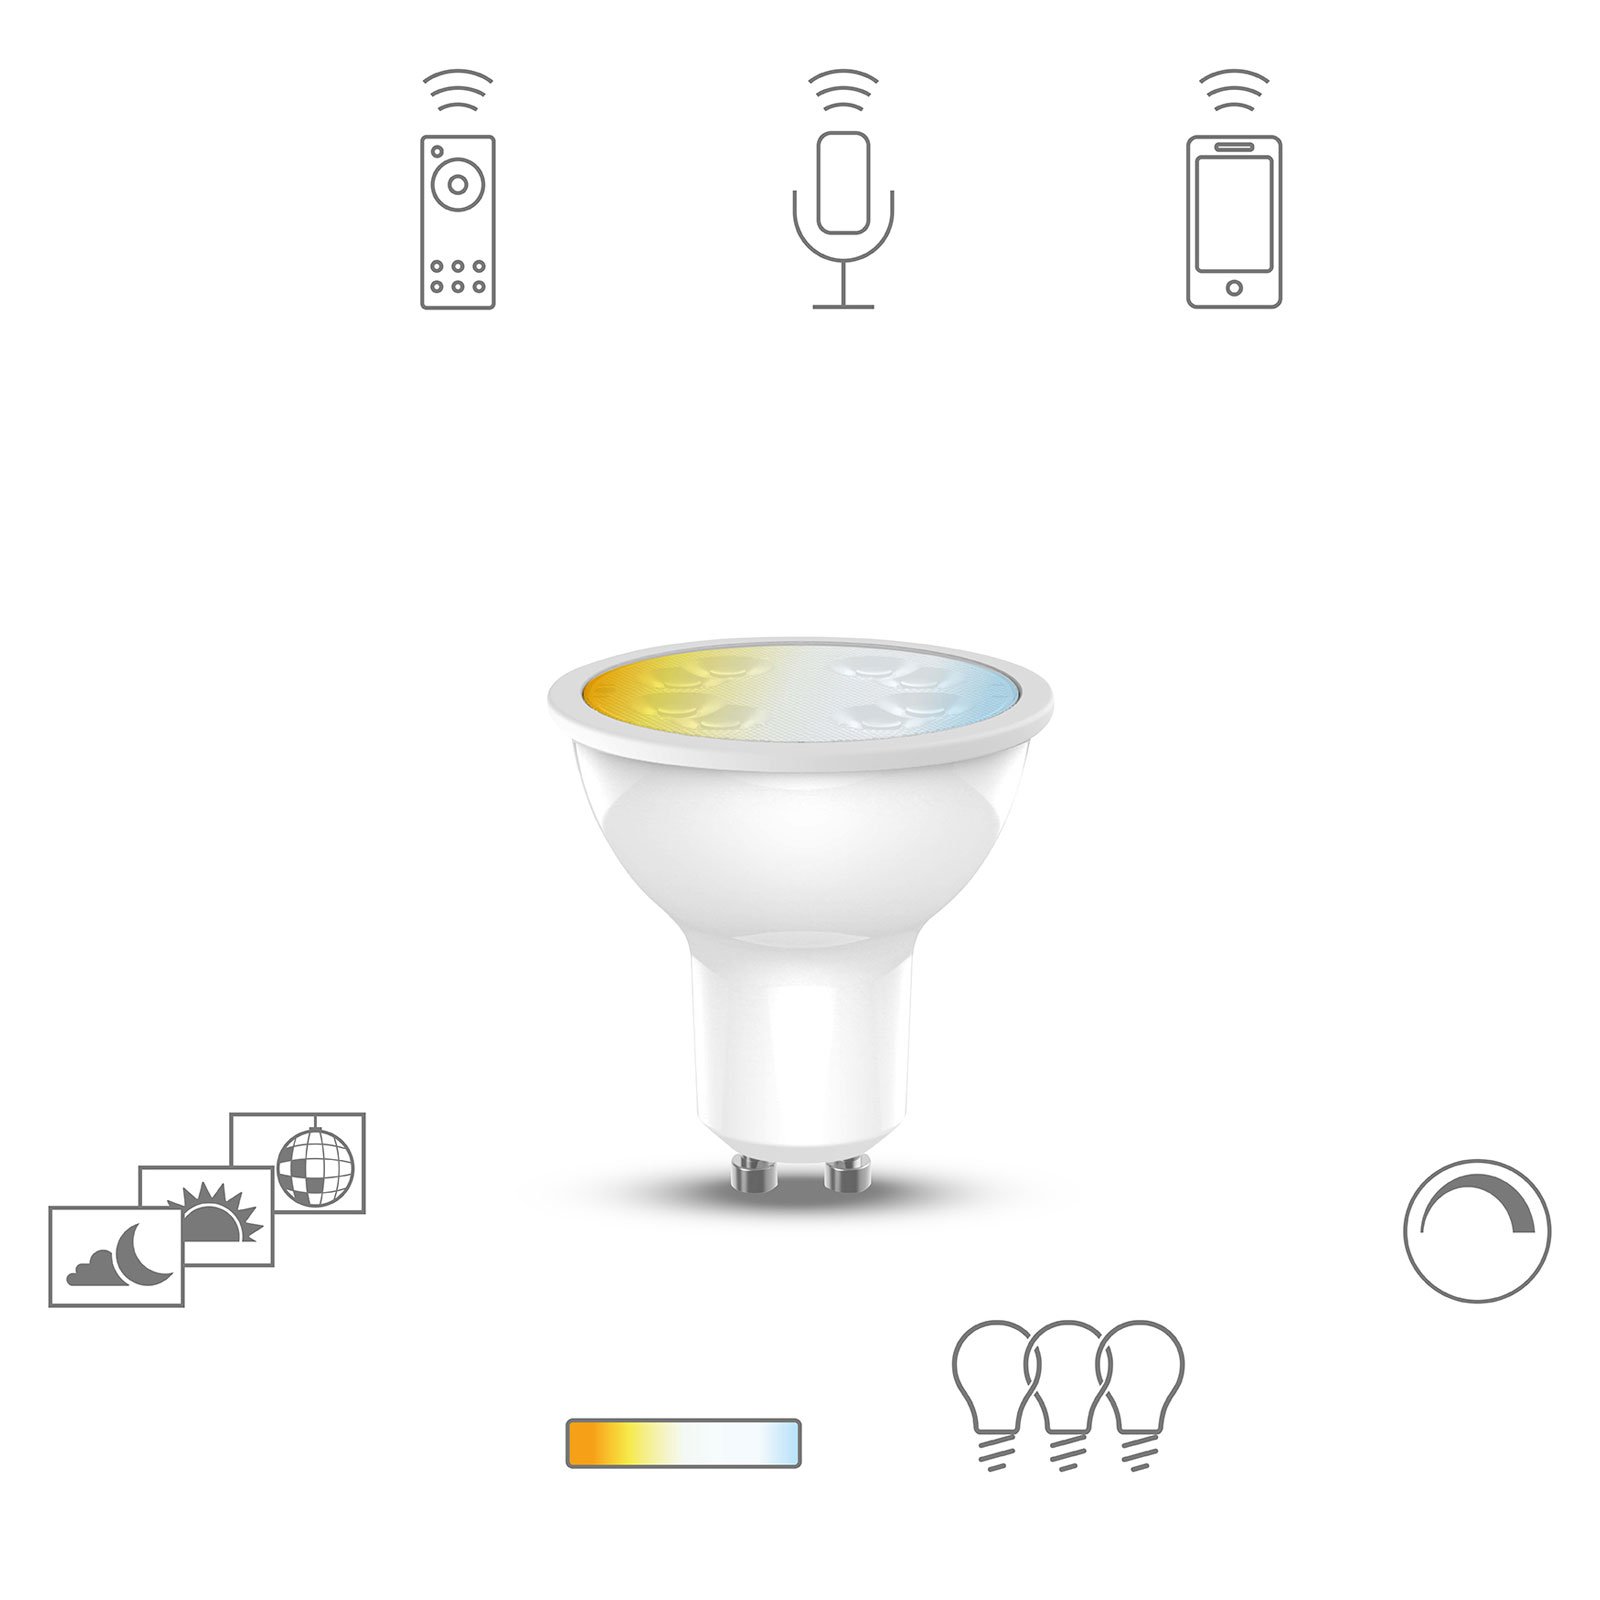 Müller Licht tint white LED bulb GU10 5.1 W, CCT